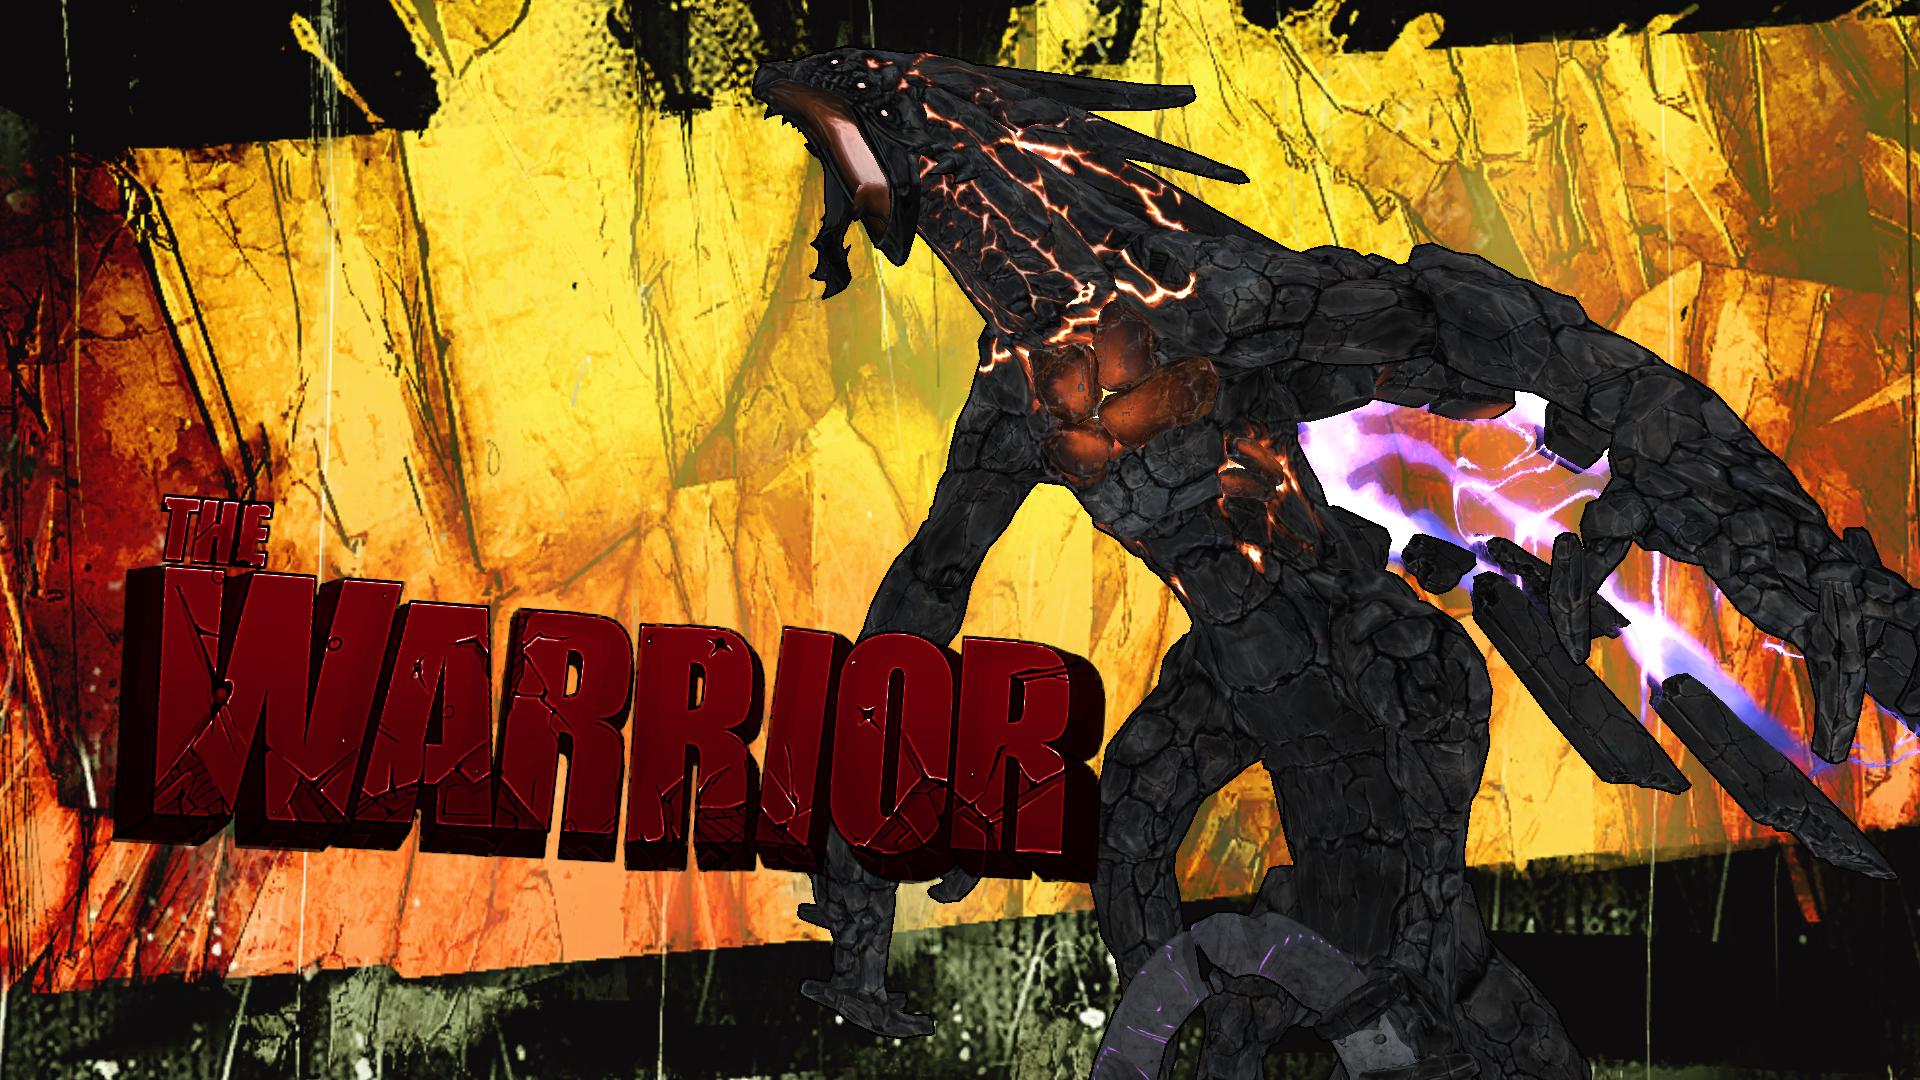 Best The Warrior (Borderlands) Desktop Images